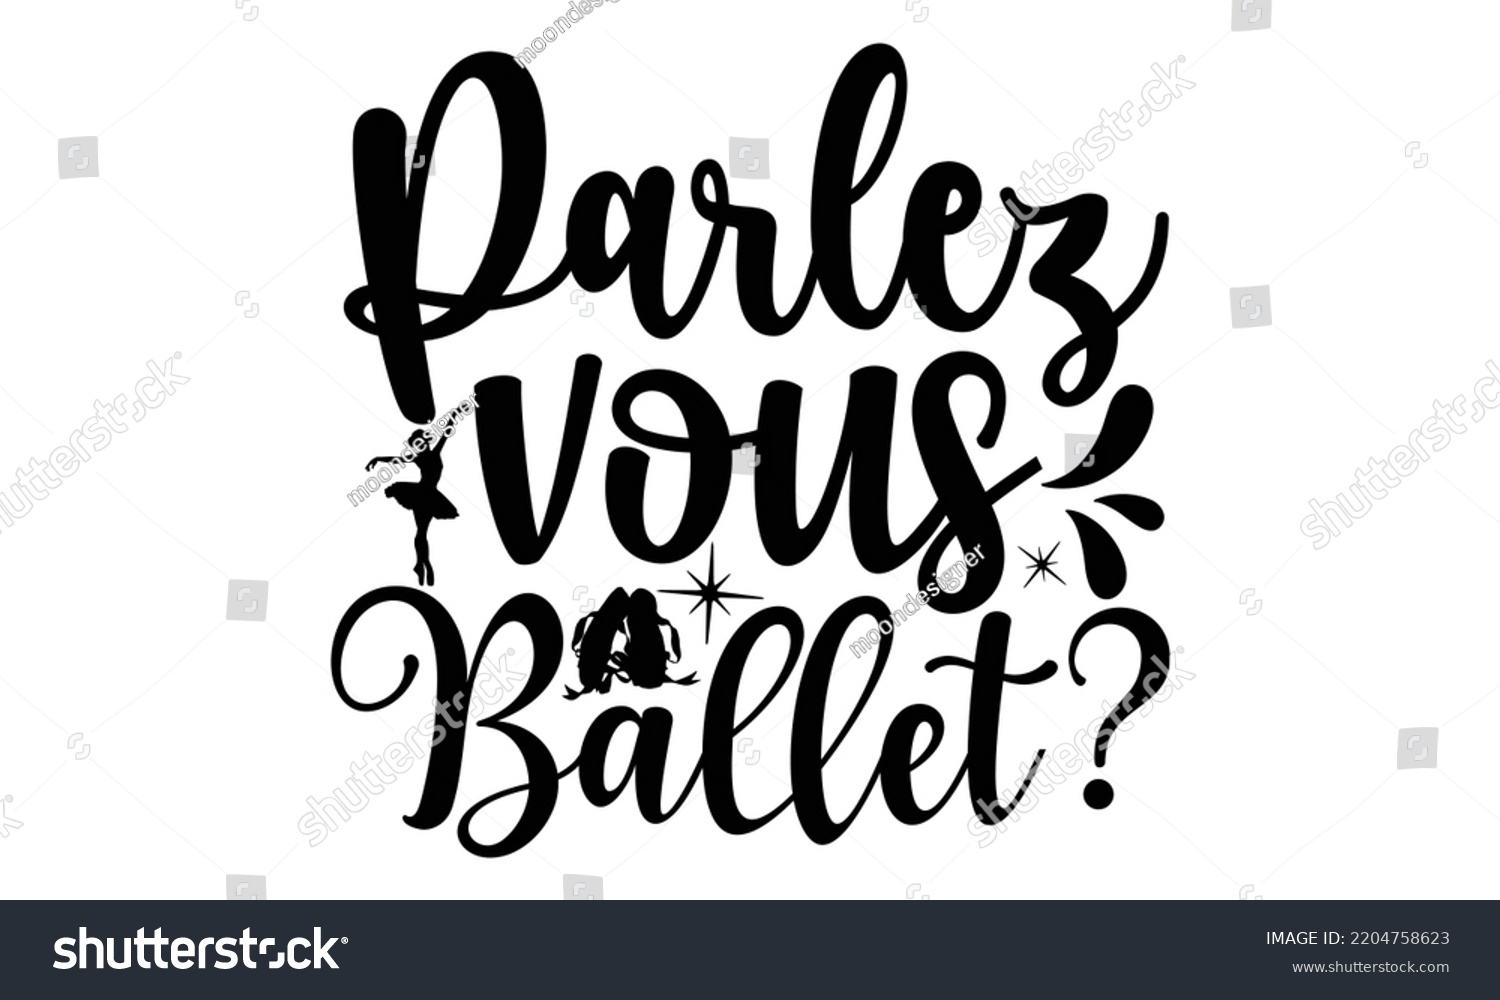 SVG of parlez vous ballet - Ballet svg t shirt design, ballet SVG Cut Files, Girl Ballet Design, Hand drawn lettering phrase and vector sign, EPS 10 svg